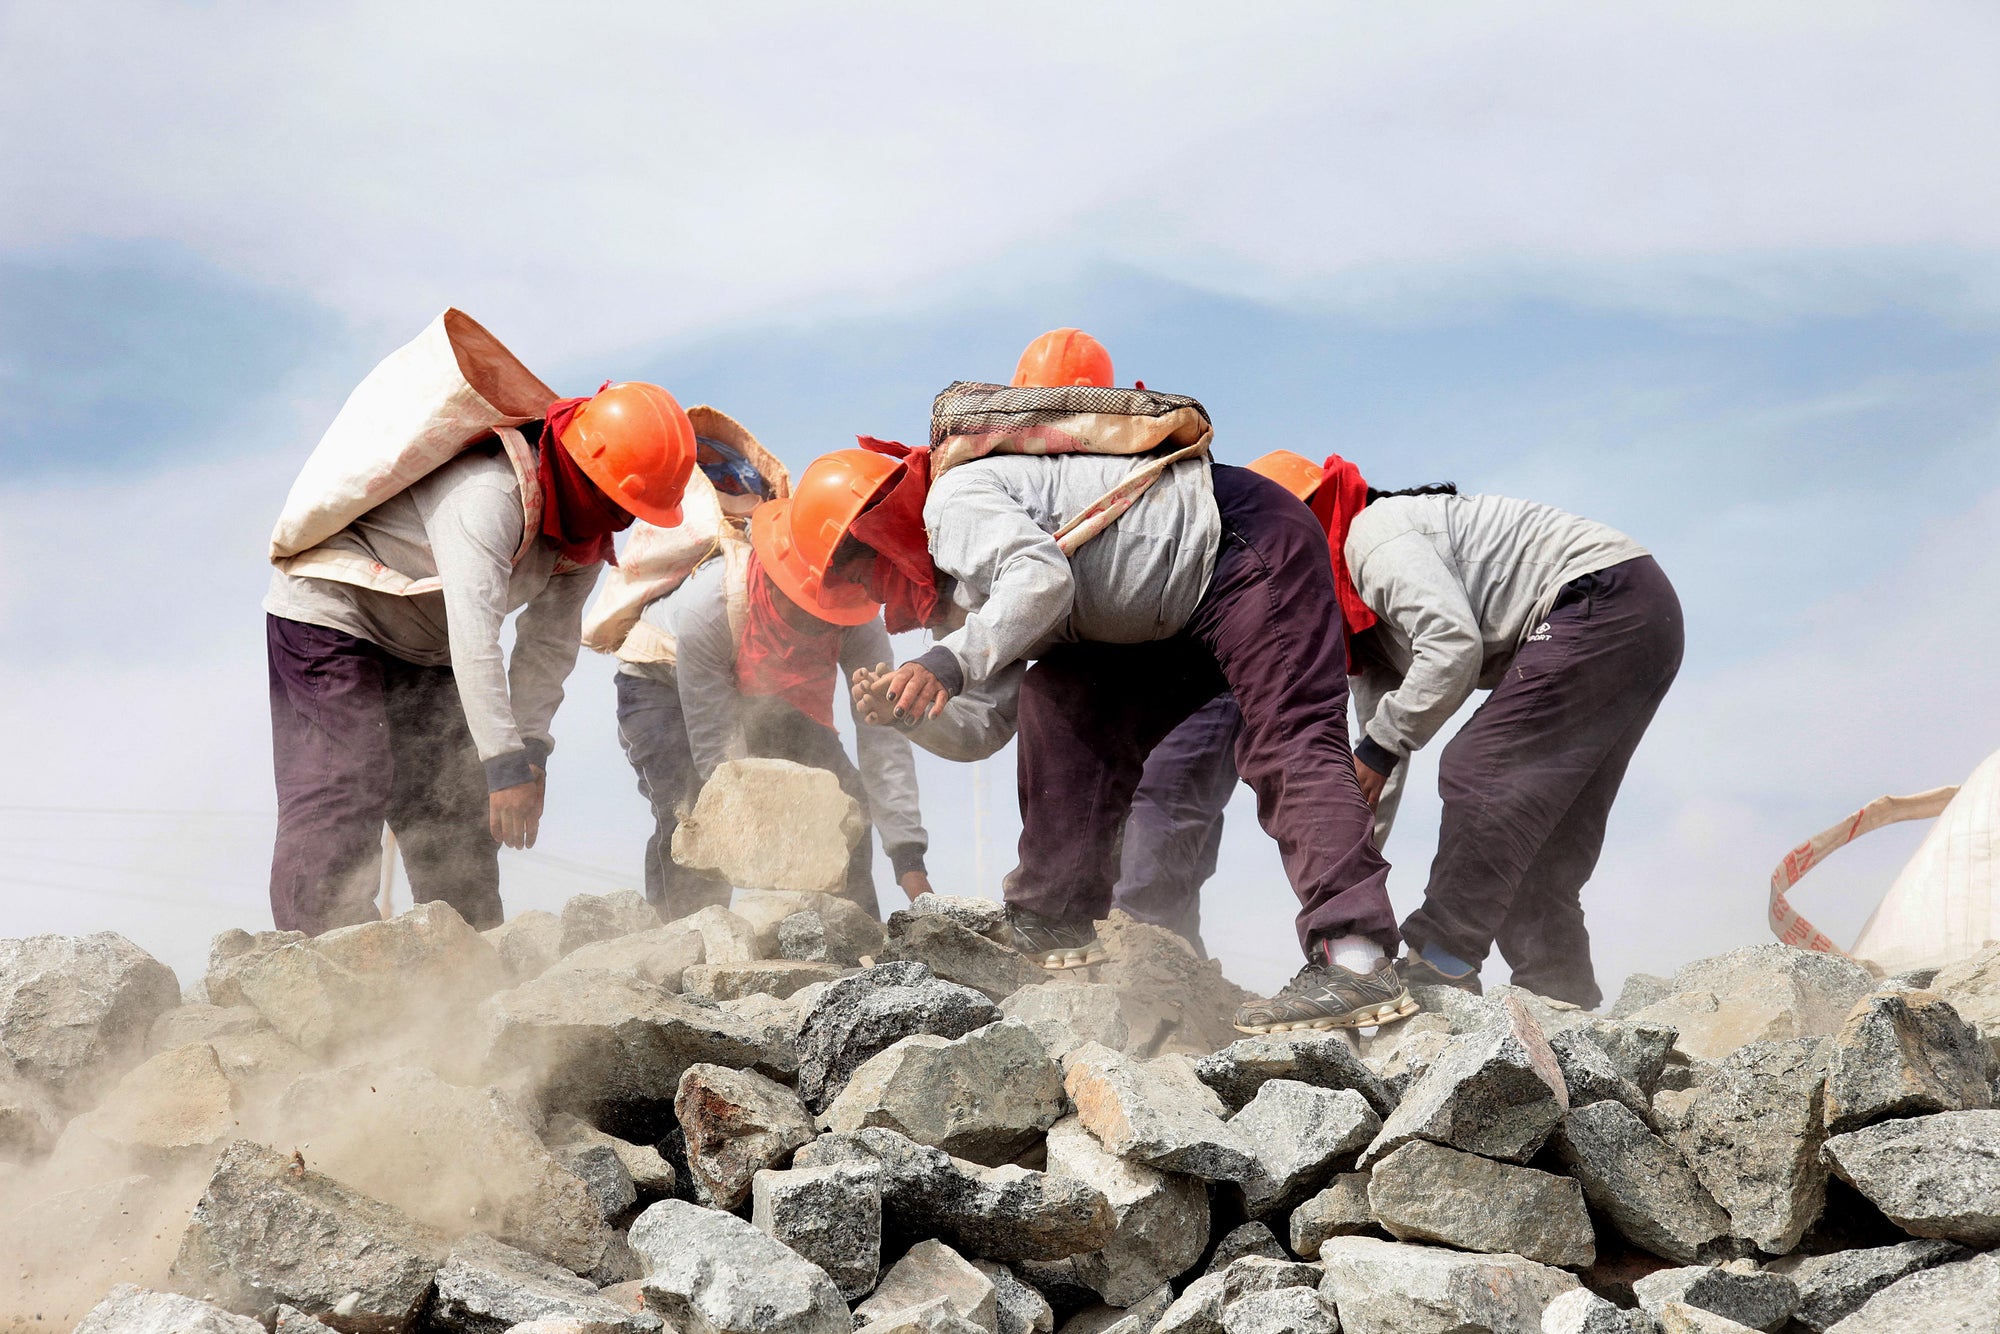 ©Nigel Wright - Nueva Esperanza miners association Peru